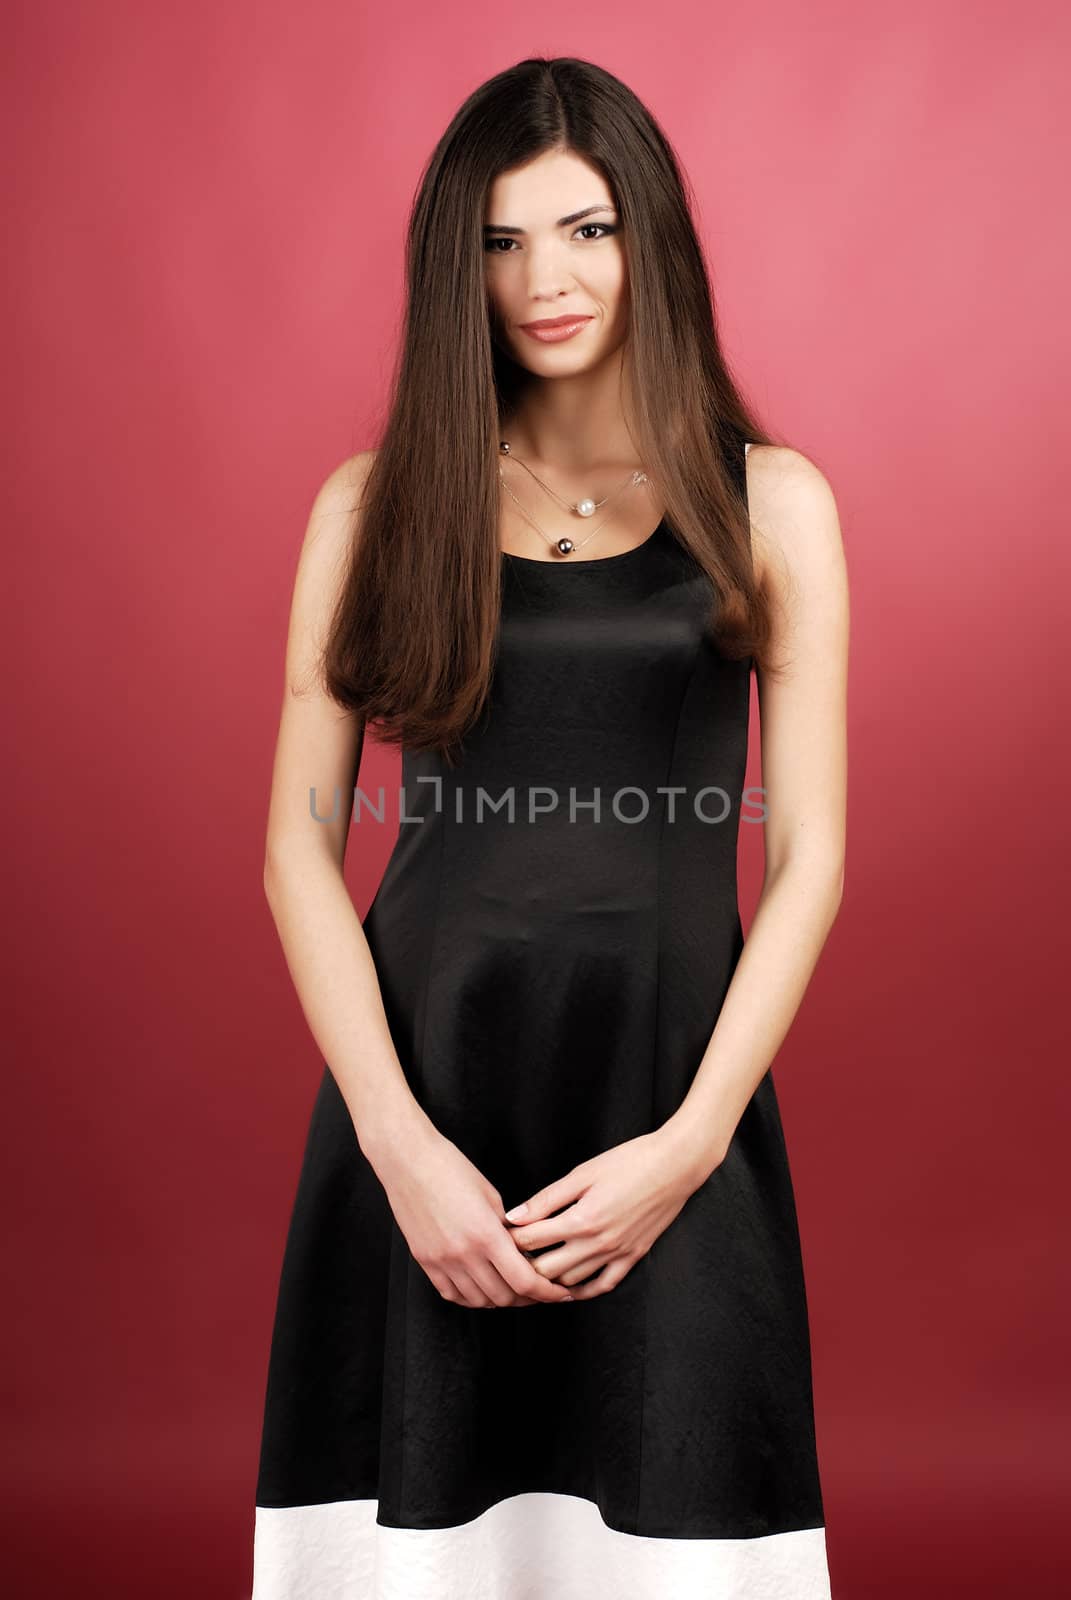 Model in studio on red background wearing dress.